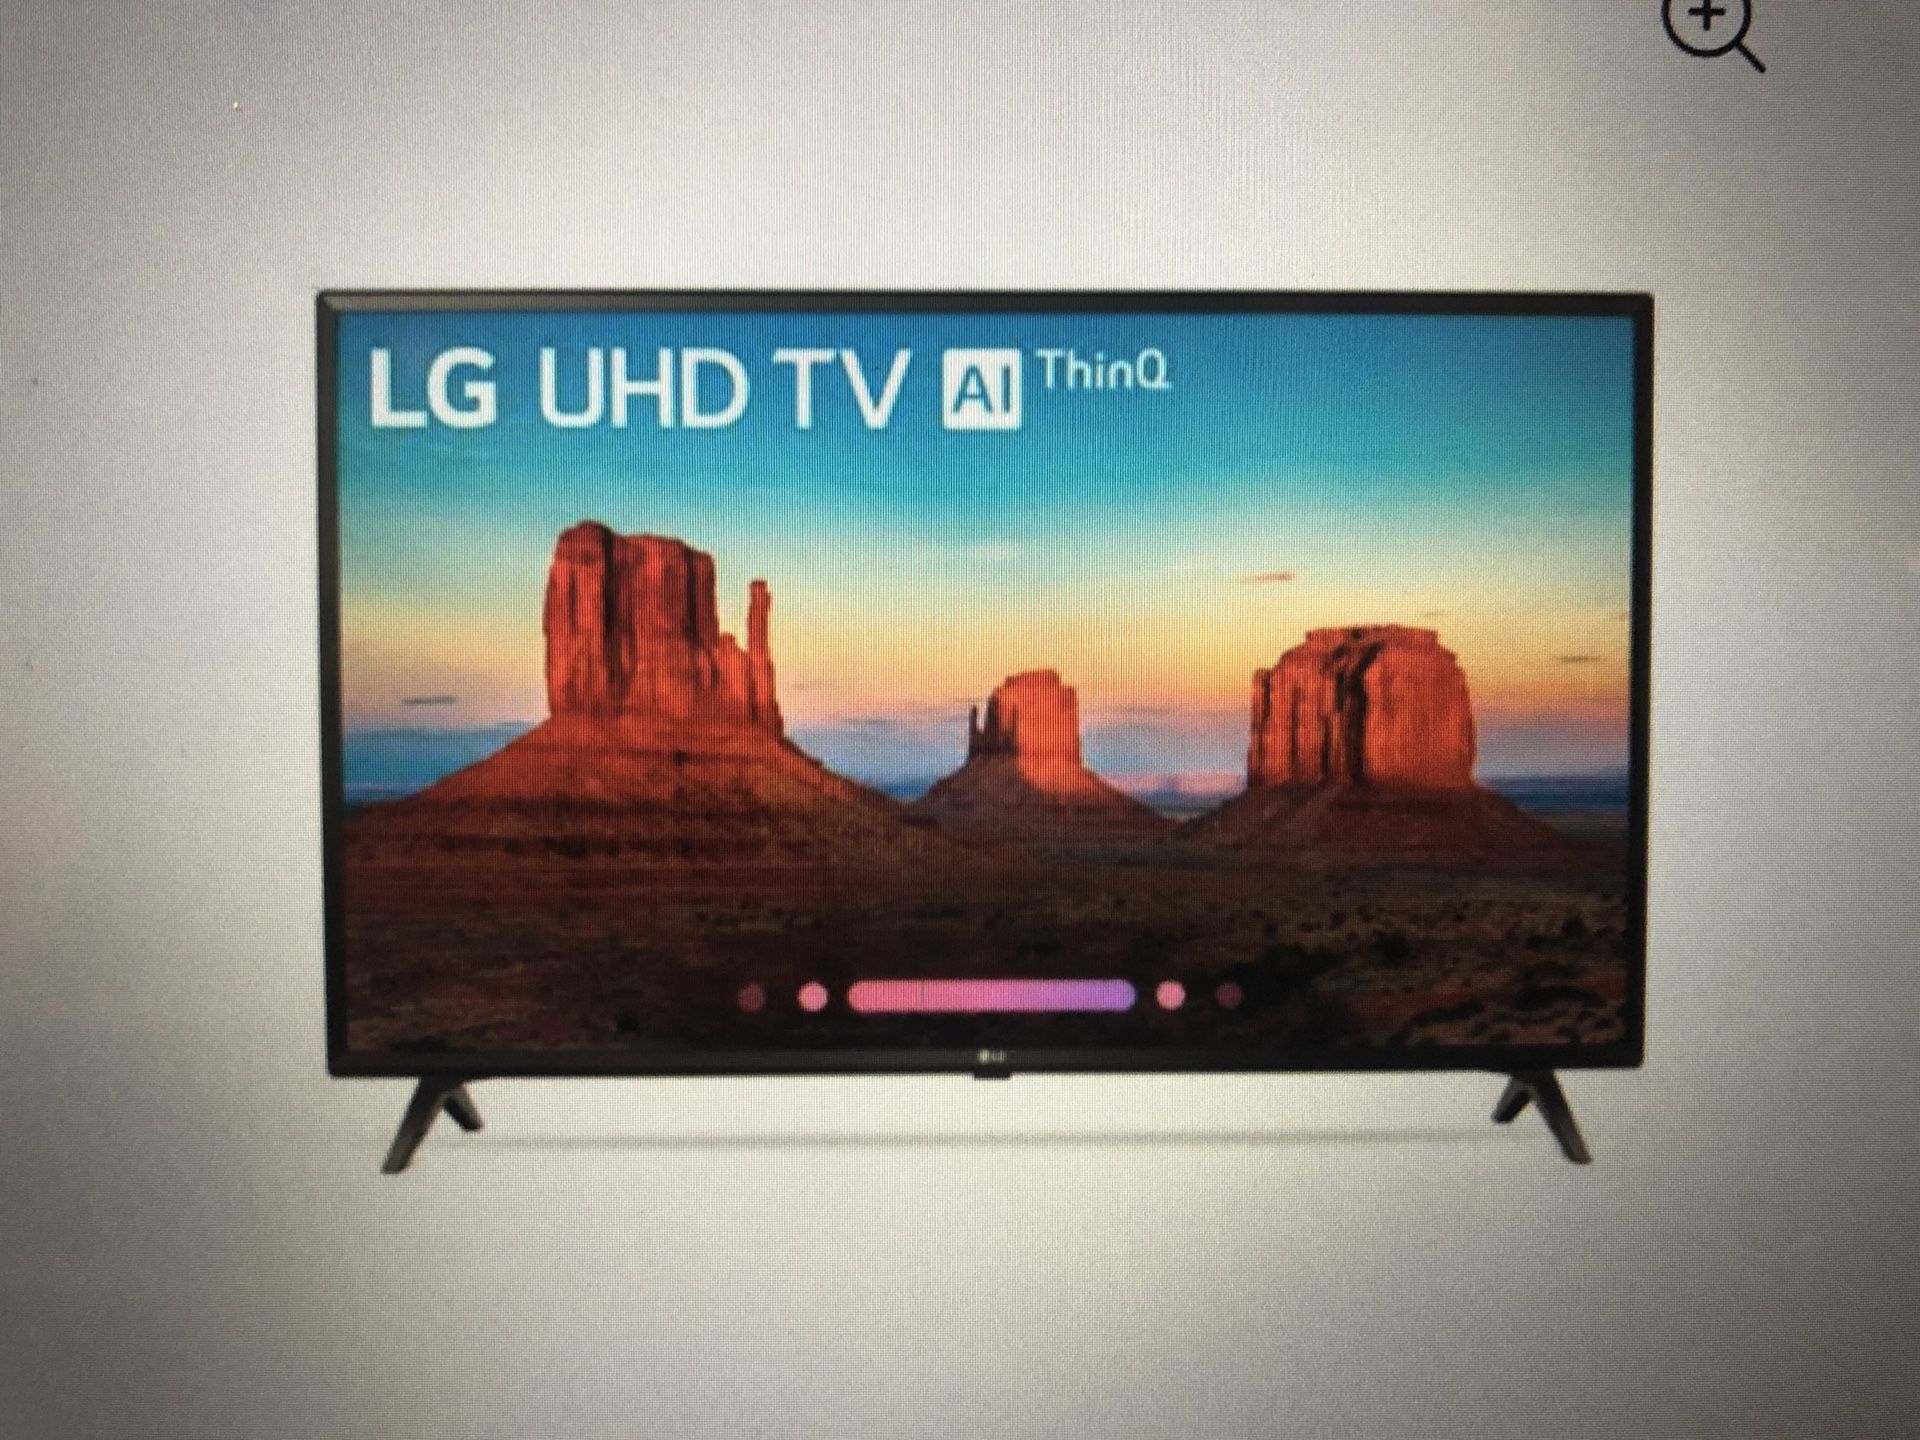 Brand new 49” LG TV